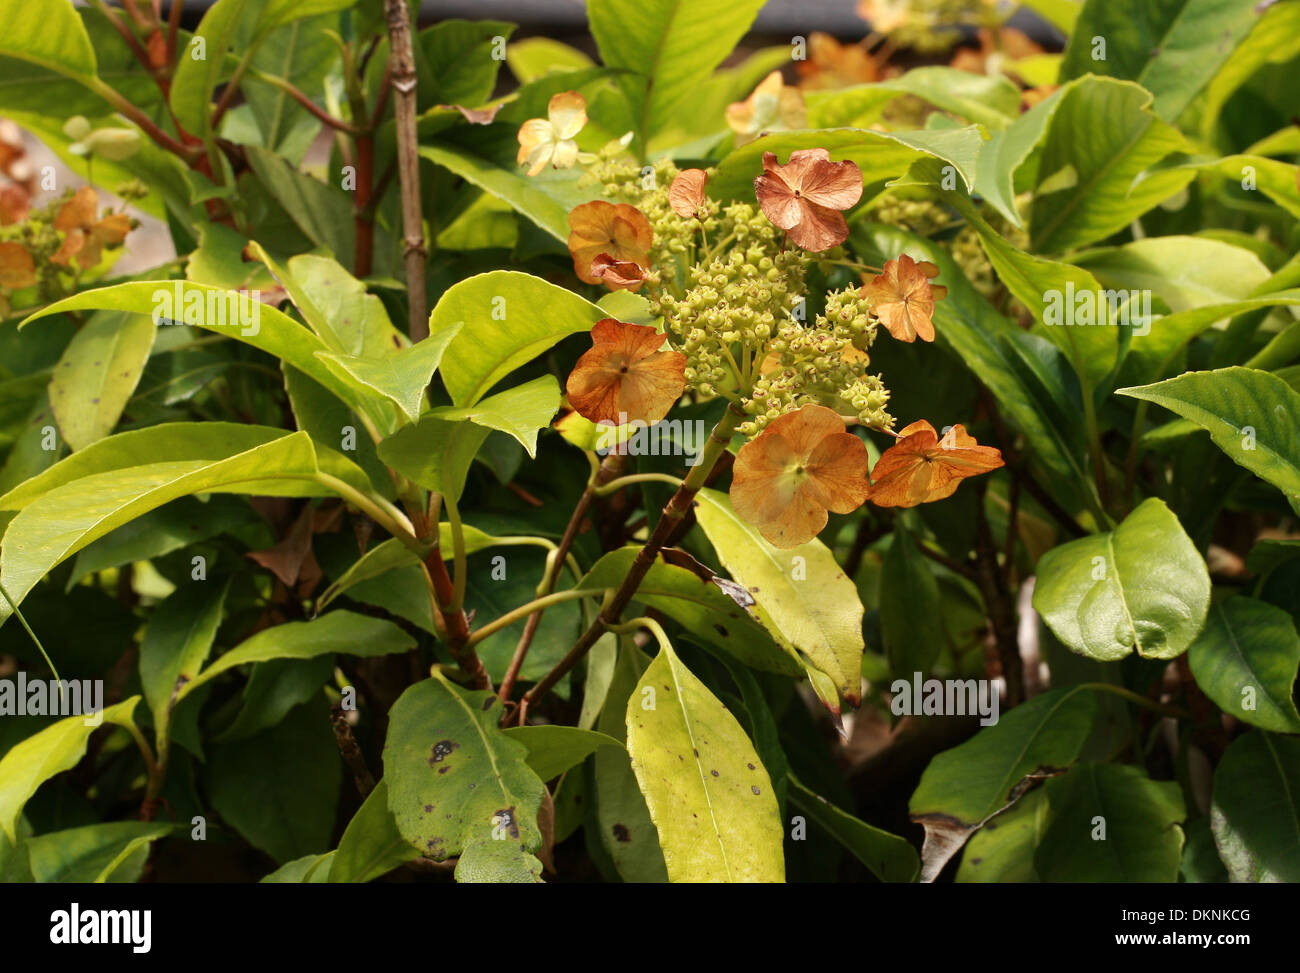 Evergreen Climbing Hydrangea, Hydrangea seemannii, Hydrangeaceae. Mexico, North America. Stock Photo